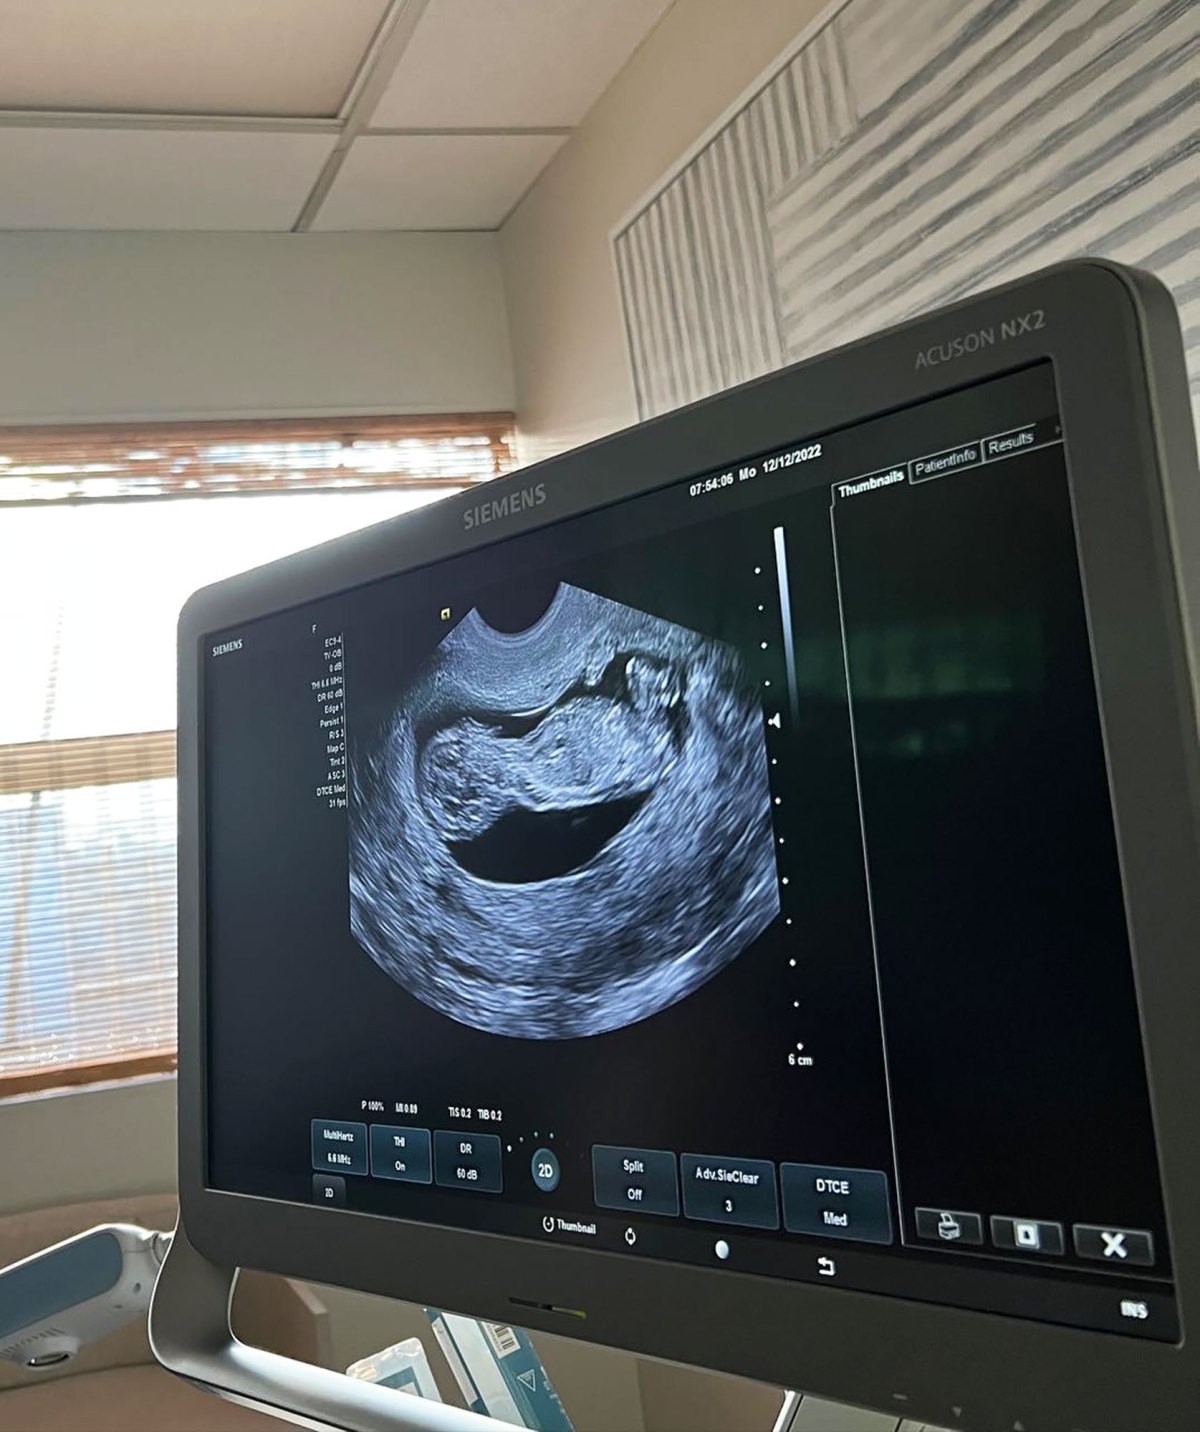 Naomi Osaka Is Pregnant, Expecting 1st Child With Boyfriend Cordae